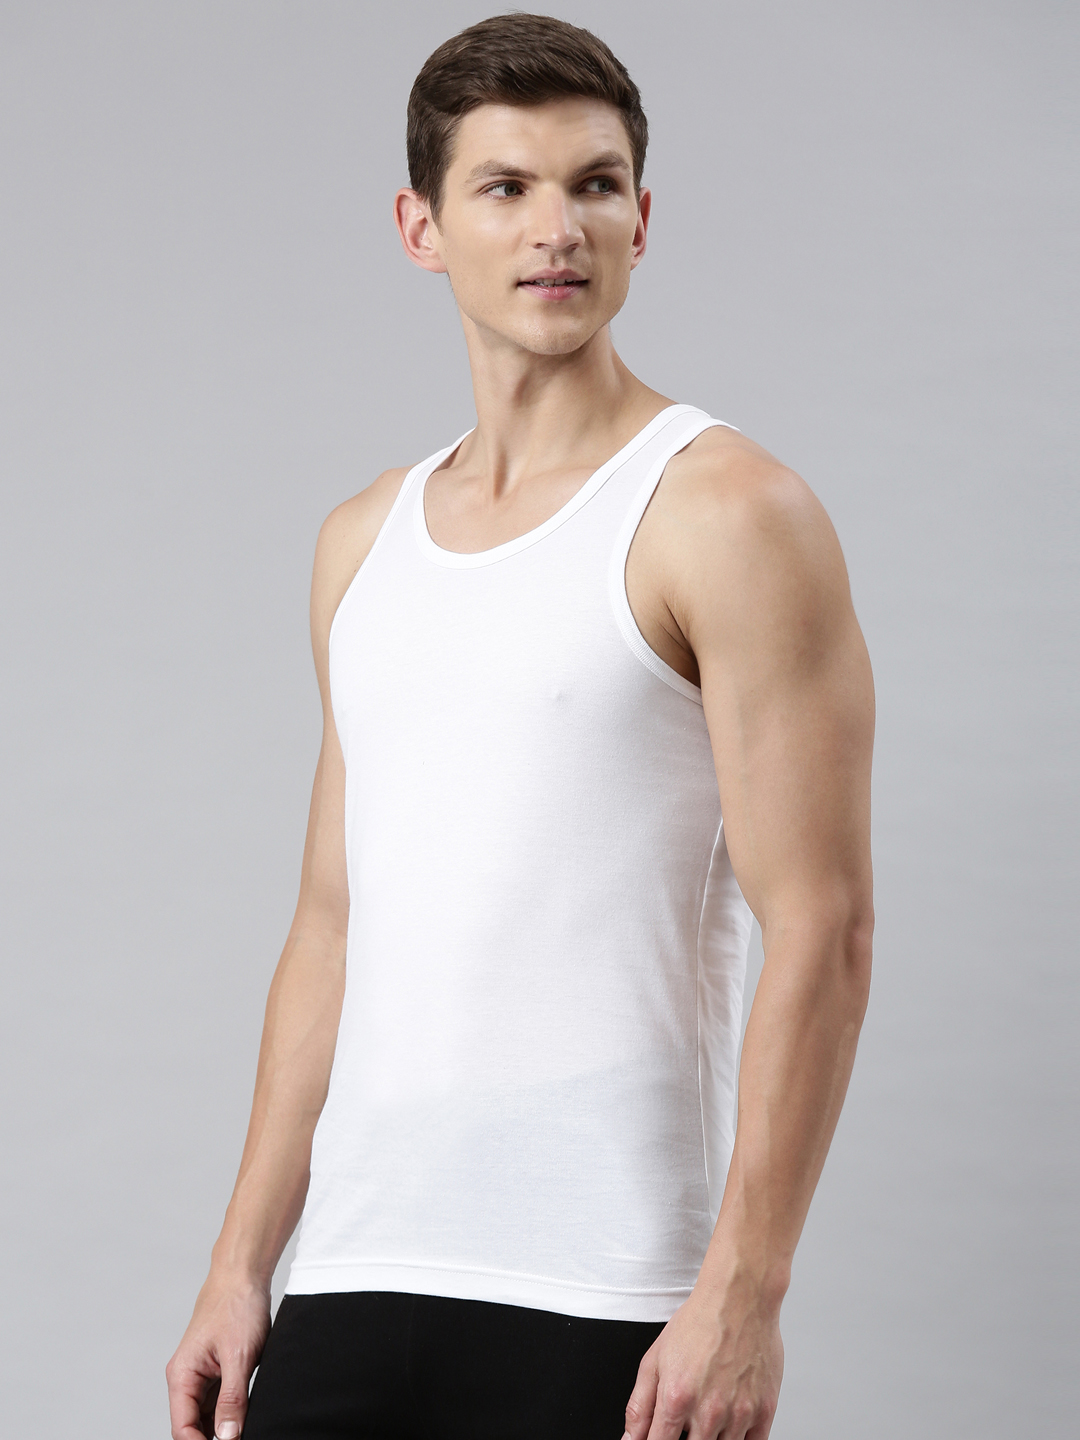 FASO Men's Regular Fit Vest | Pack of 3 | 100% organic cotton